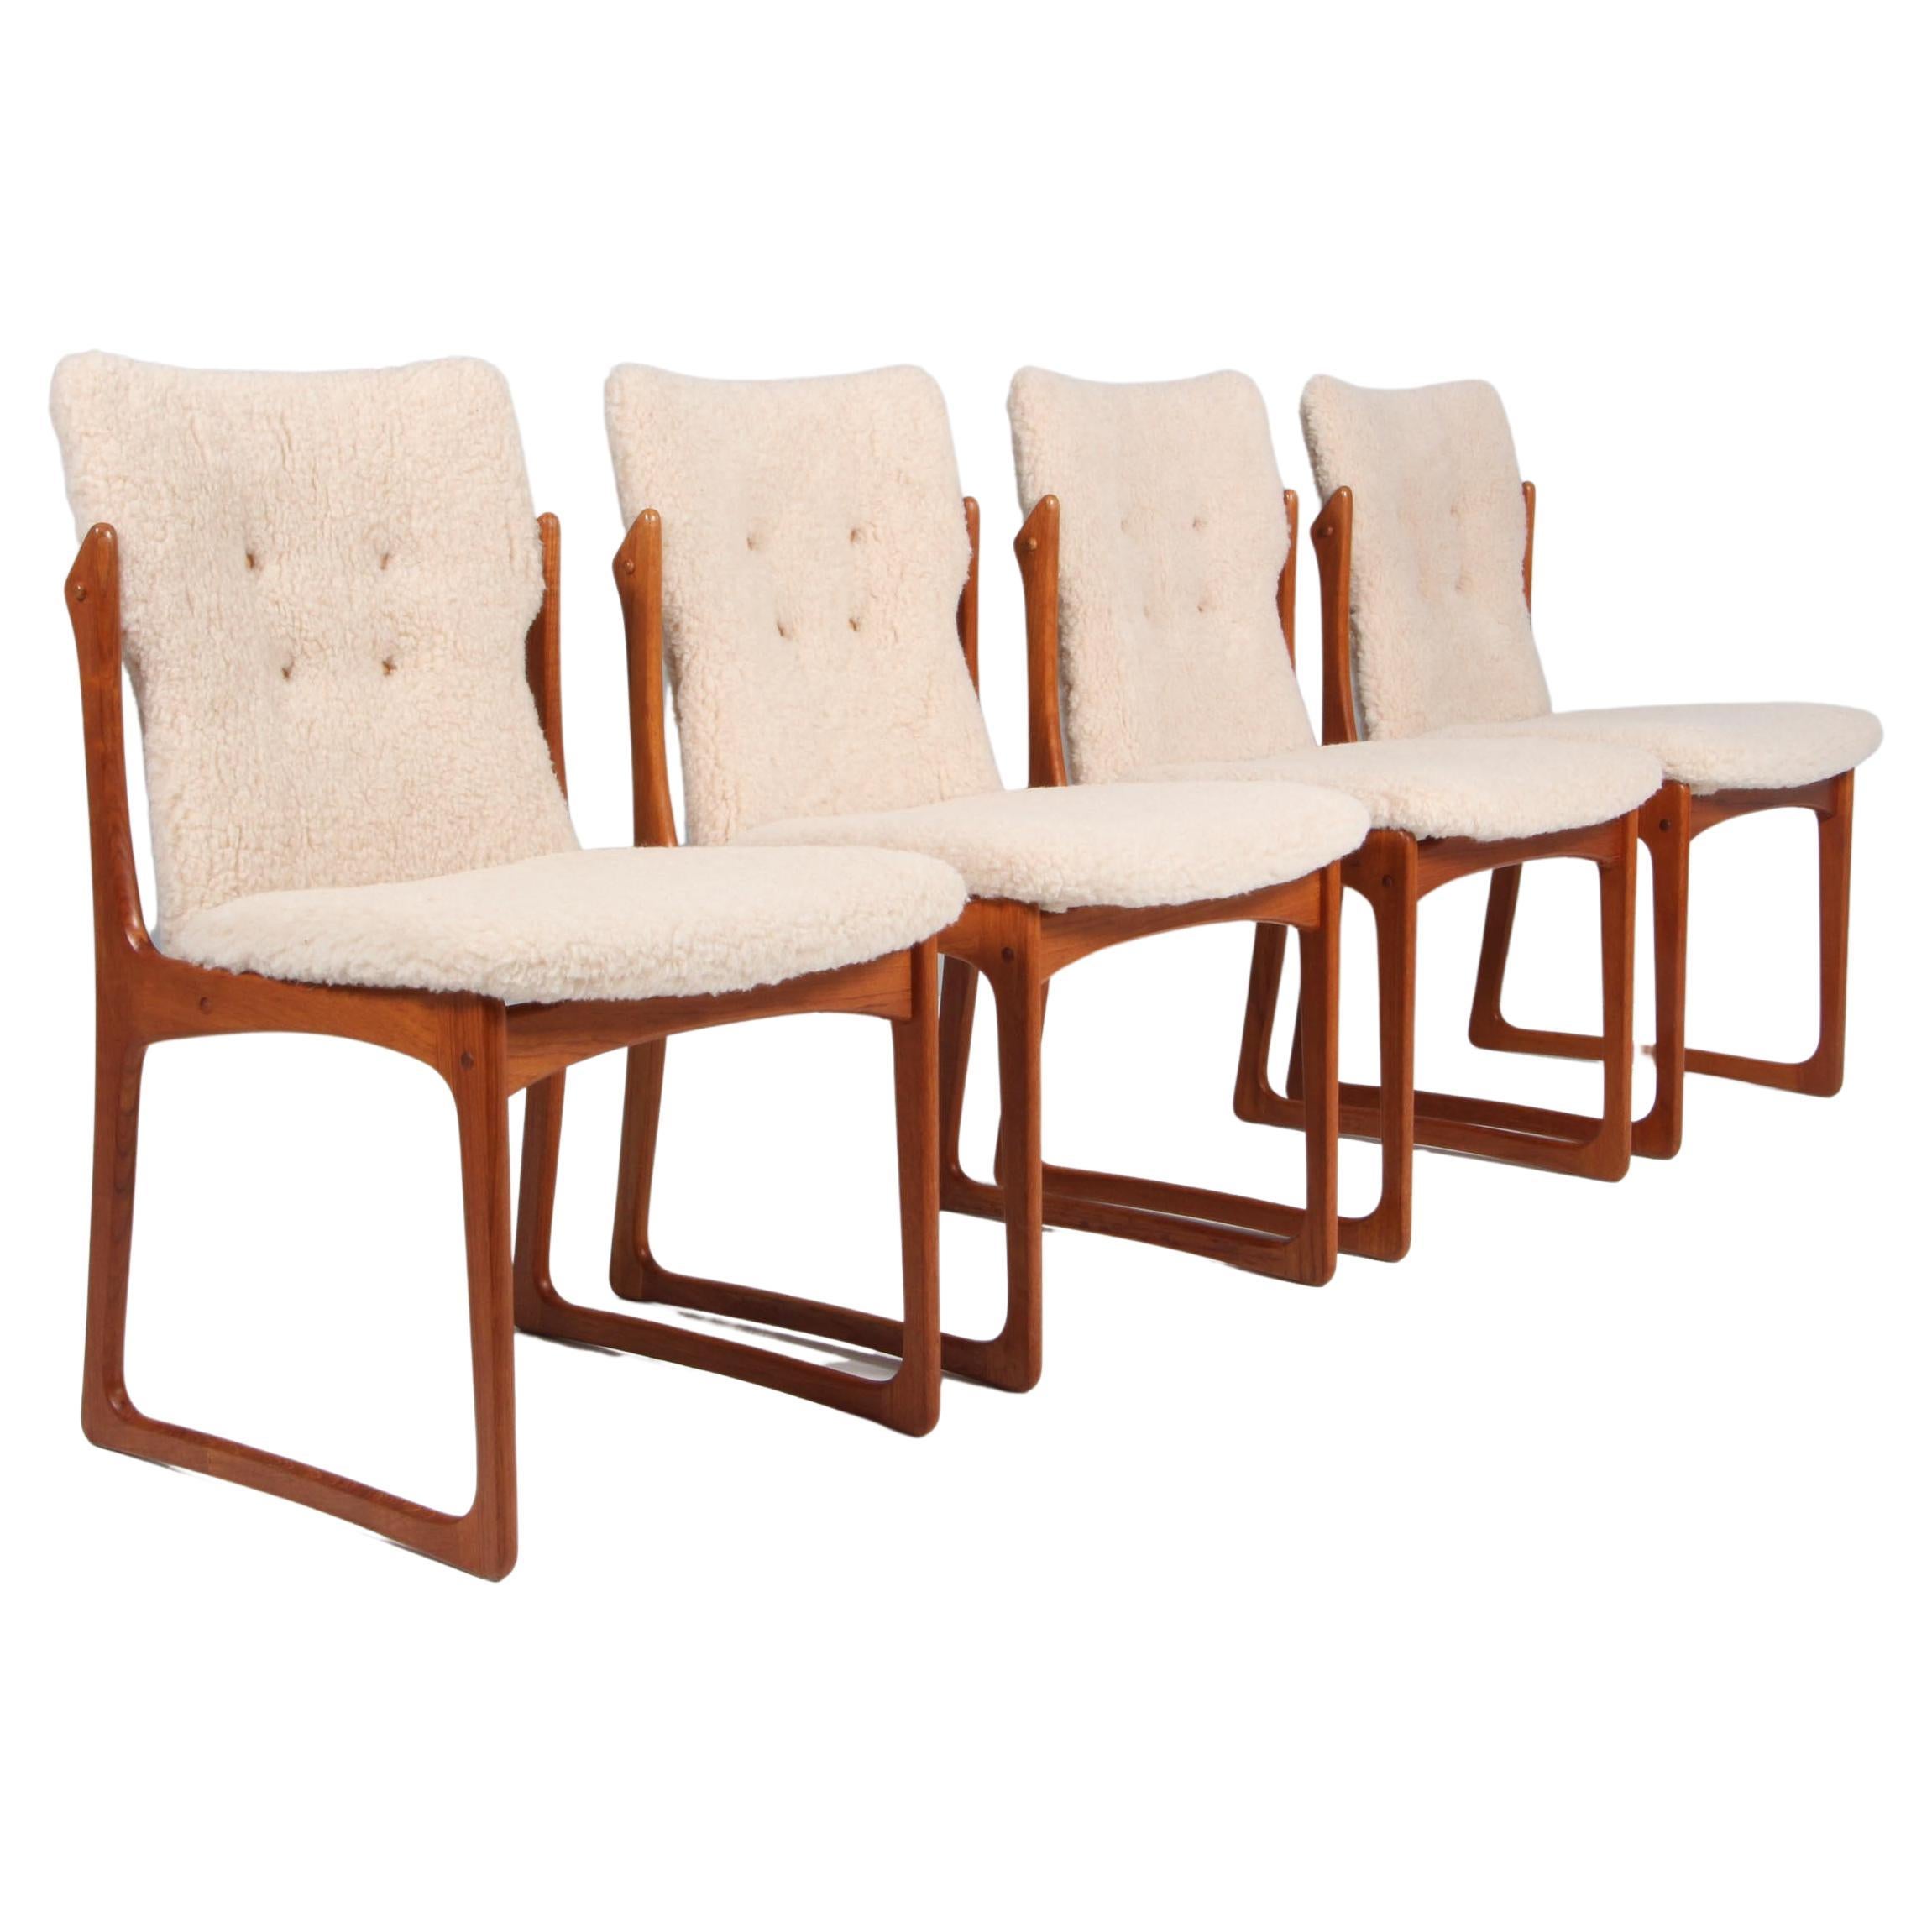 Set of Four Teak Dining Chairs by Vamdrup Stolefabrik, Denmark. Lambswool